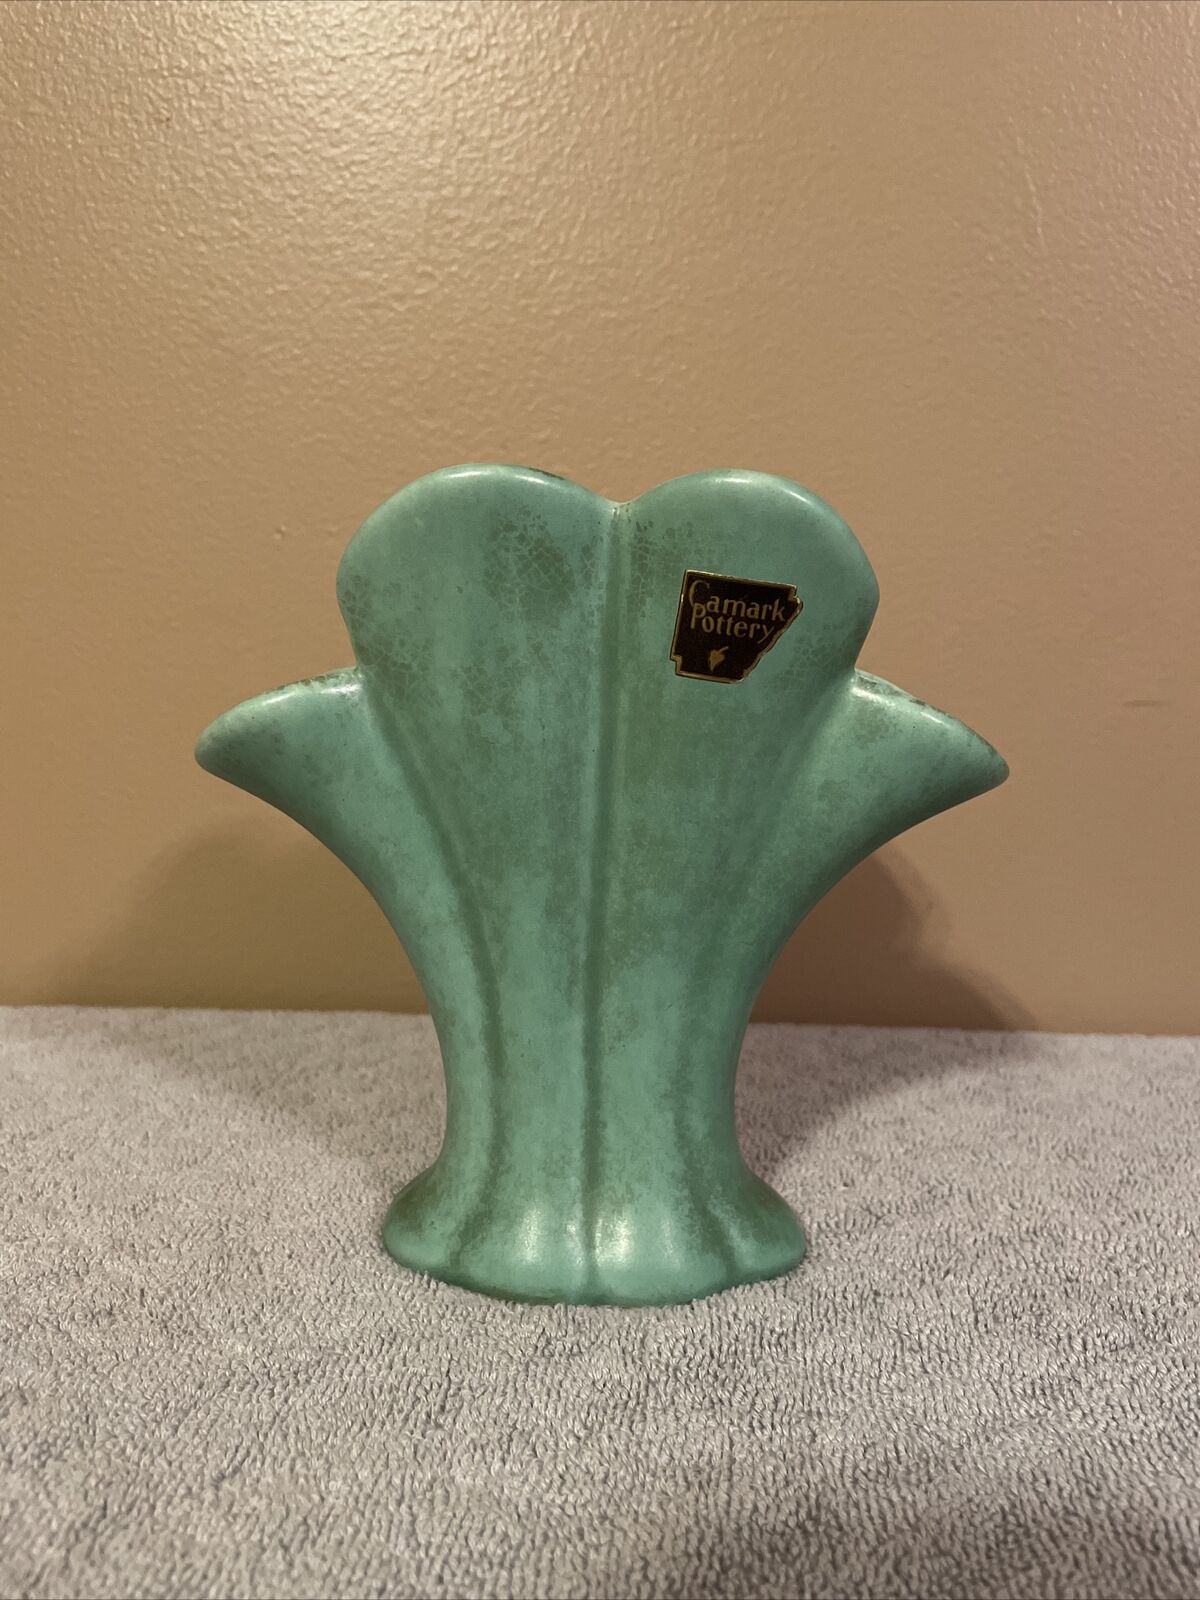 Vintage Camark  Fluted Fan Bud Vase Aqua Green Drip Glaze 6"